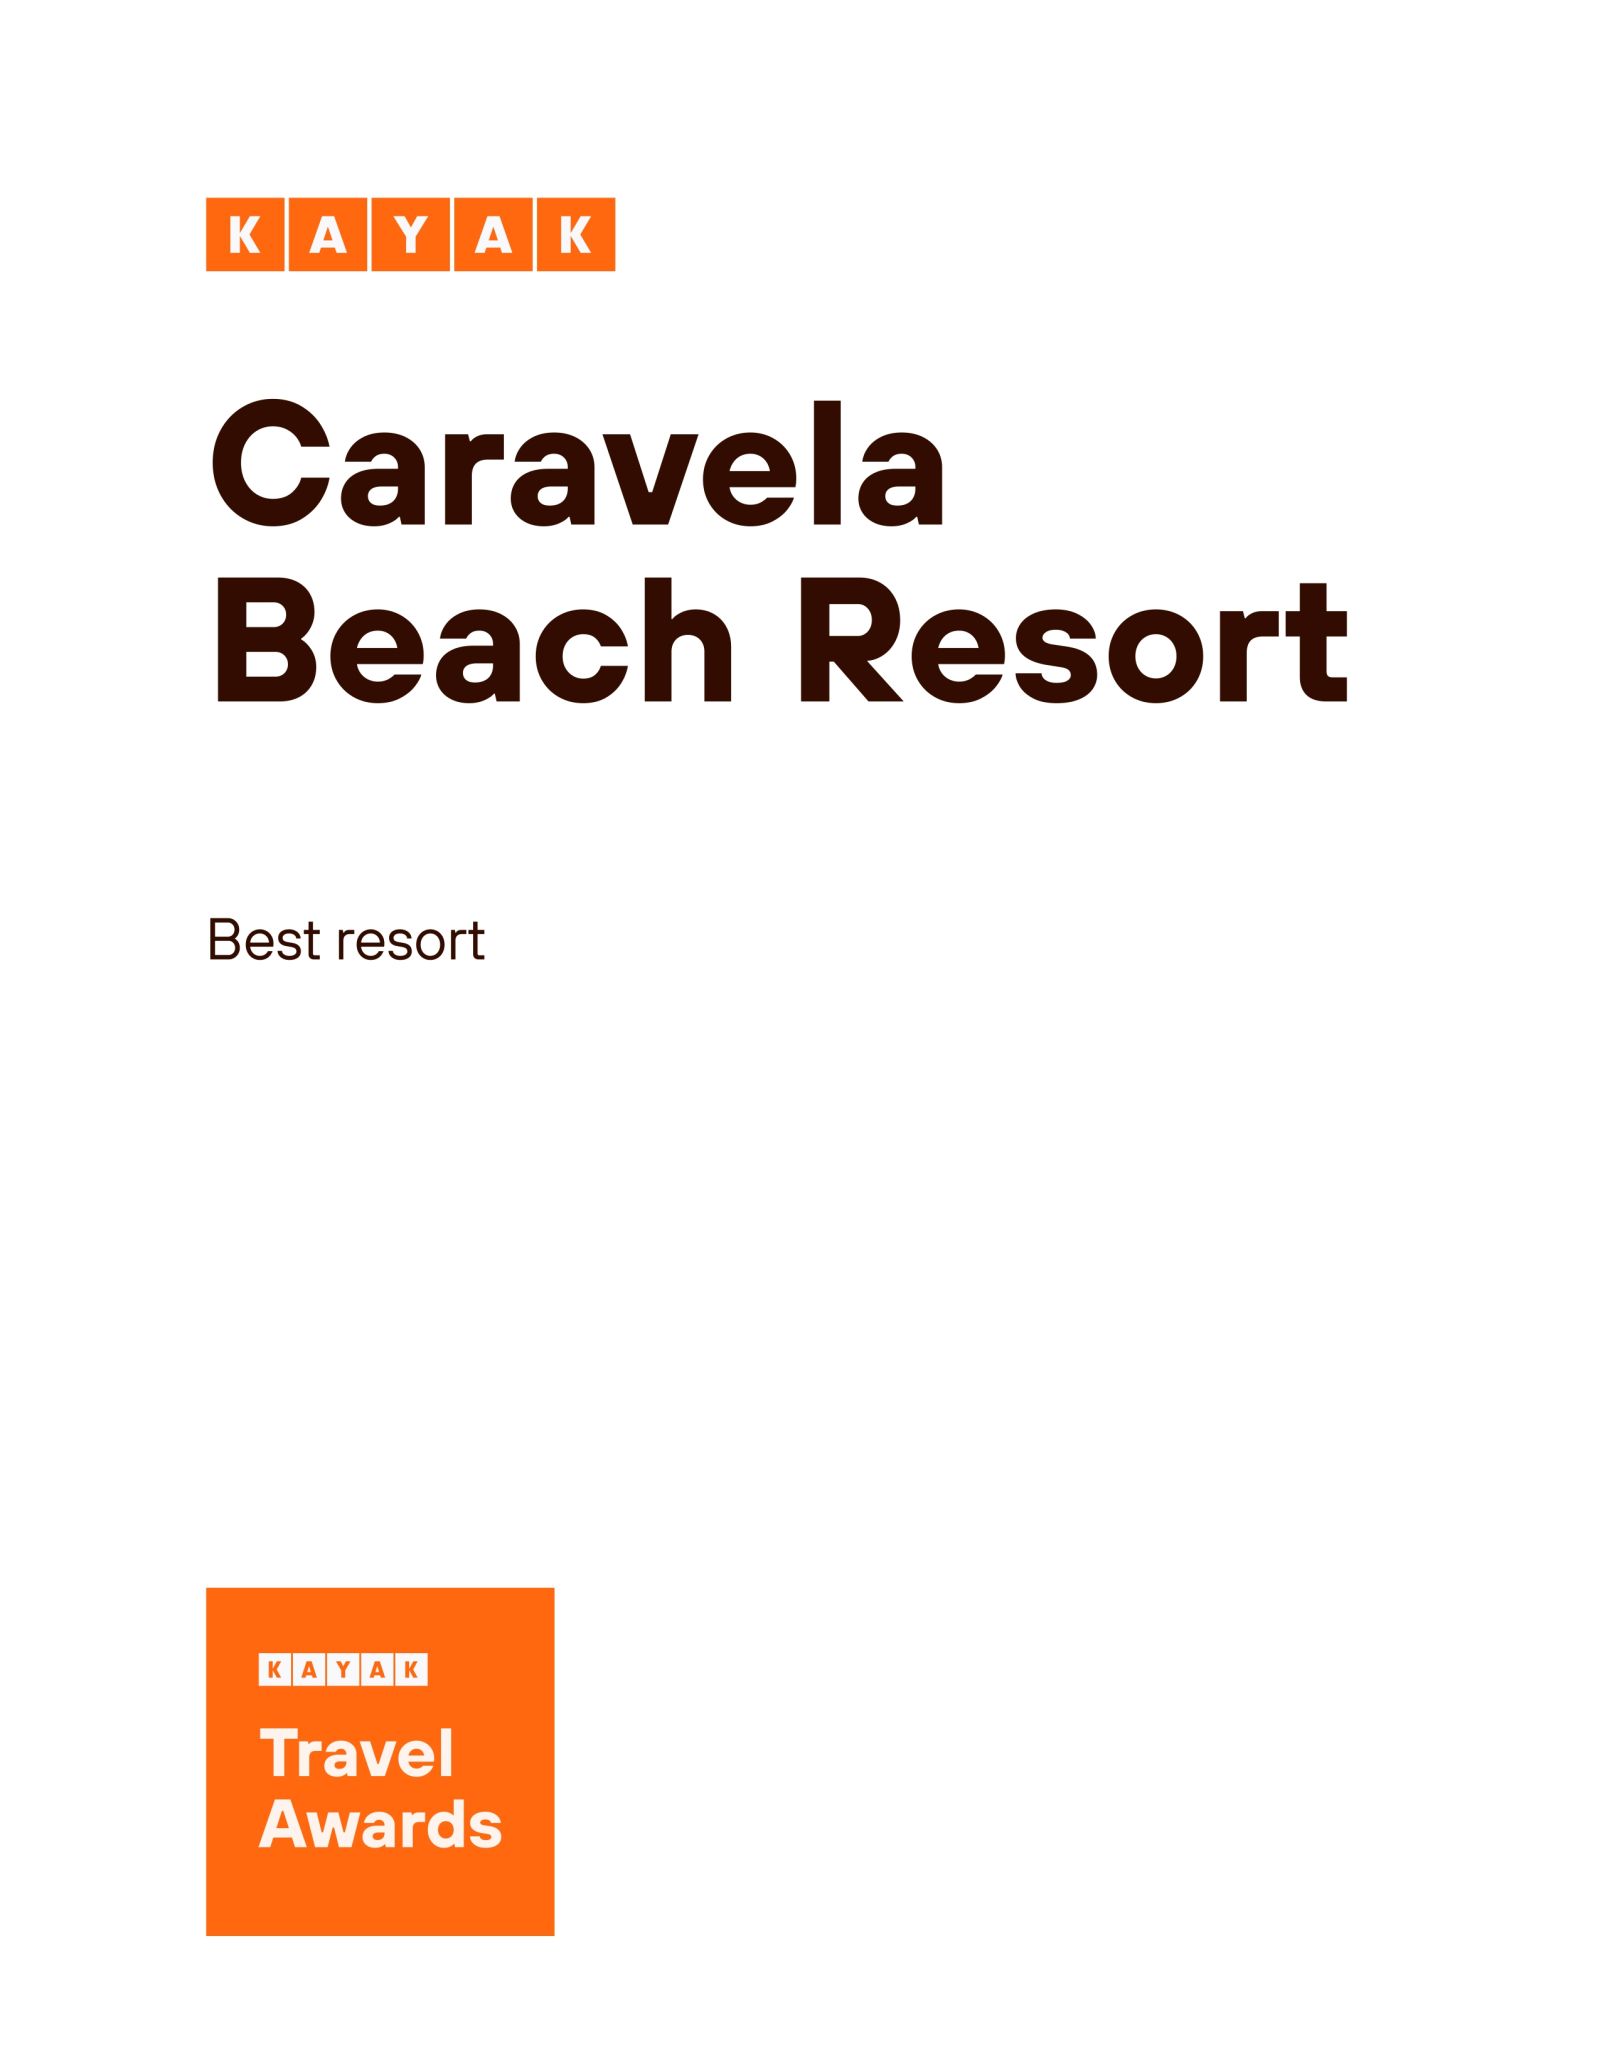 Kayak Certificate - Caravela Beach Resort page-0001